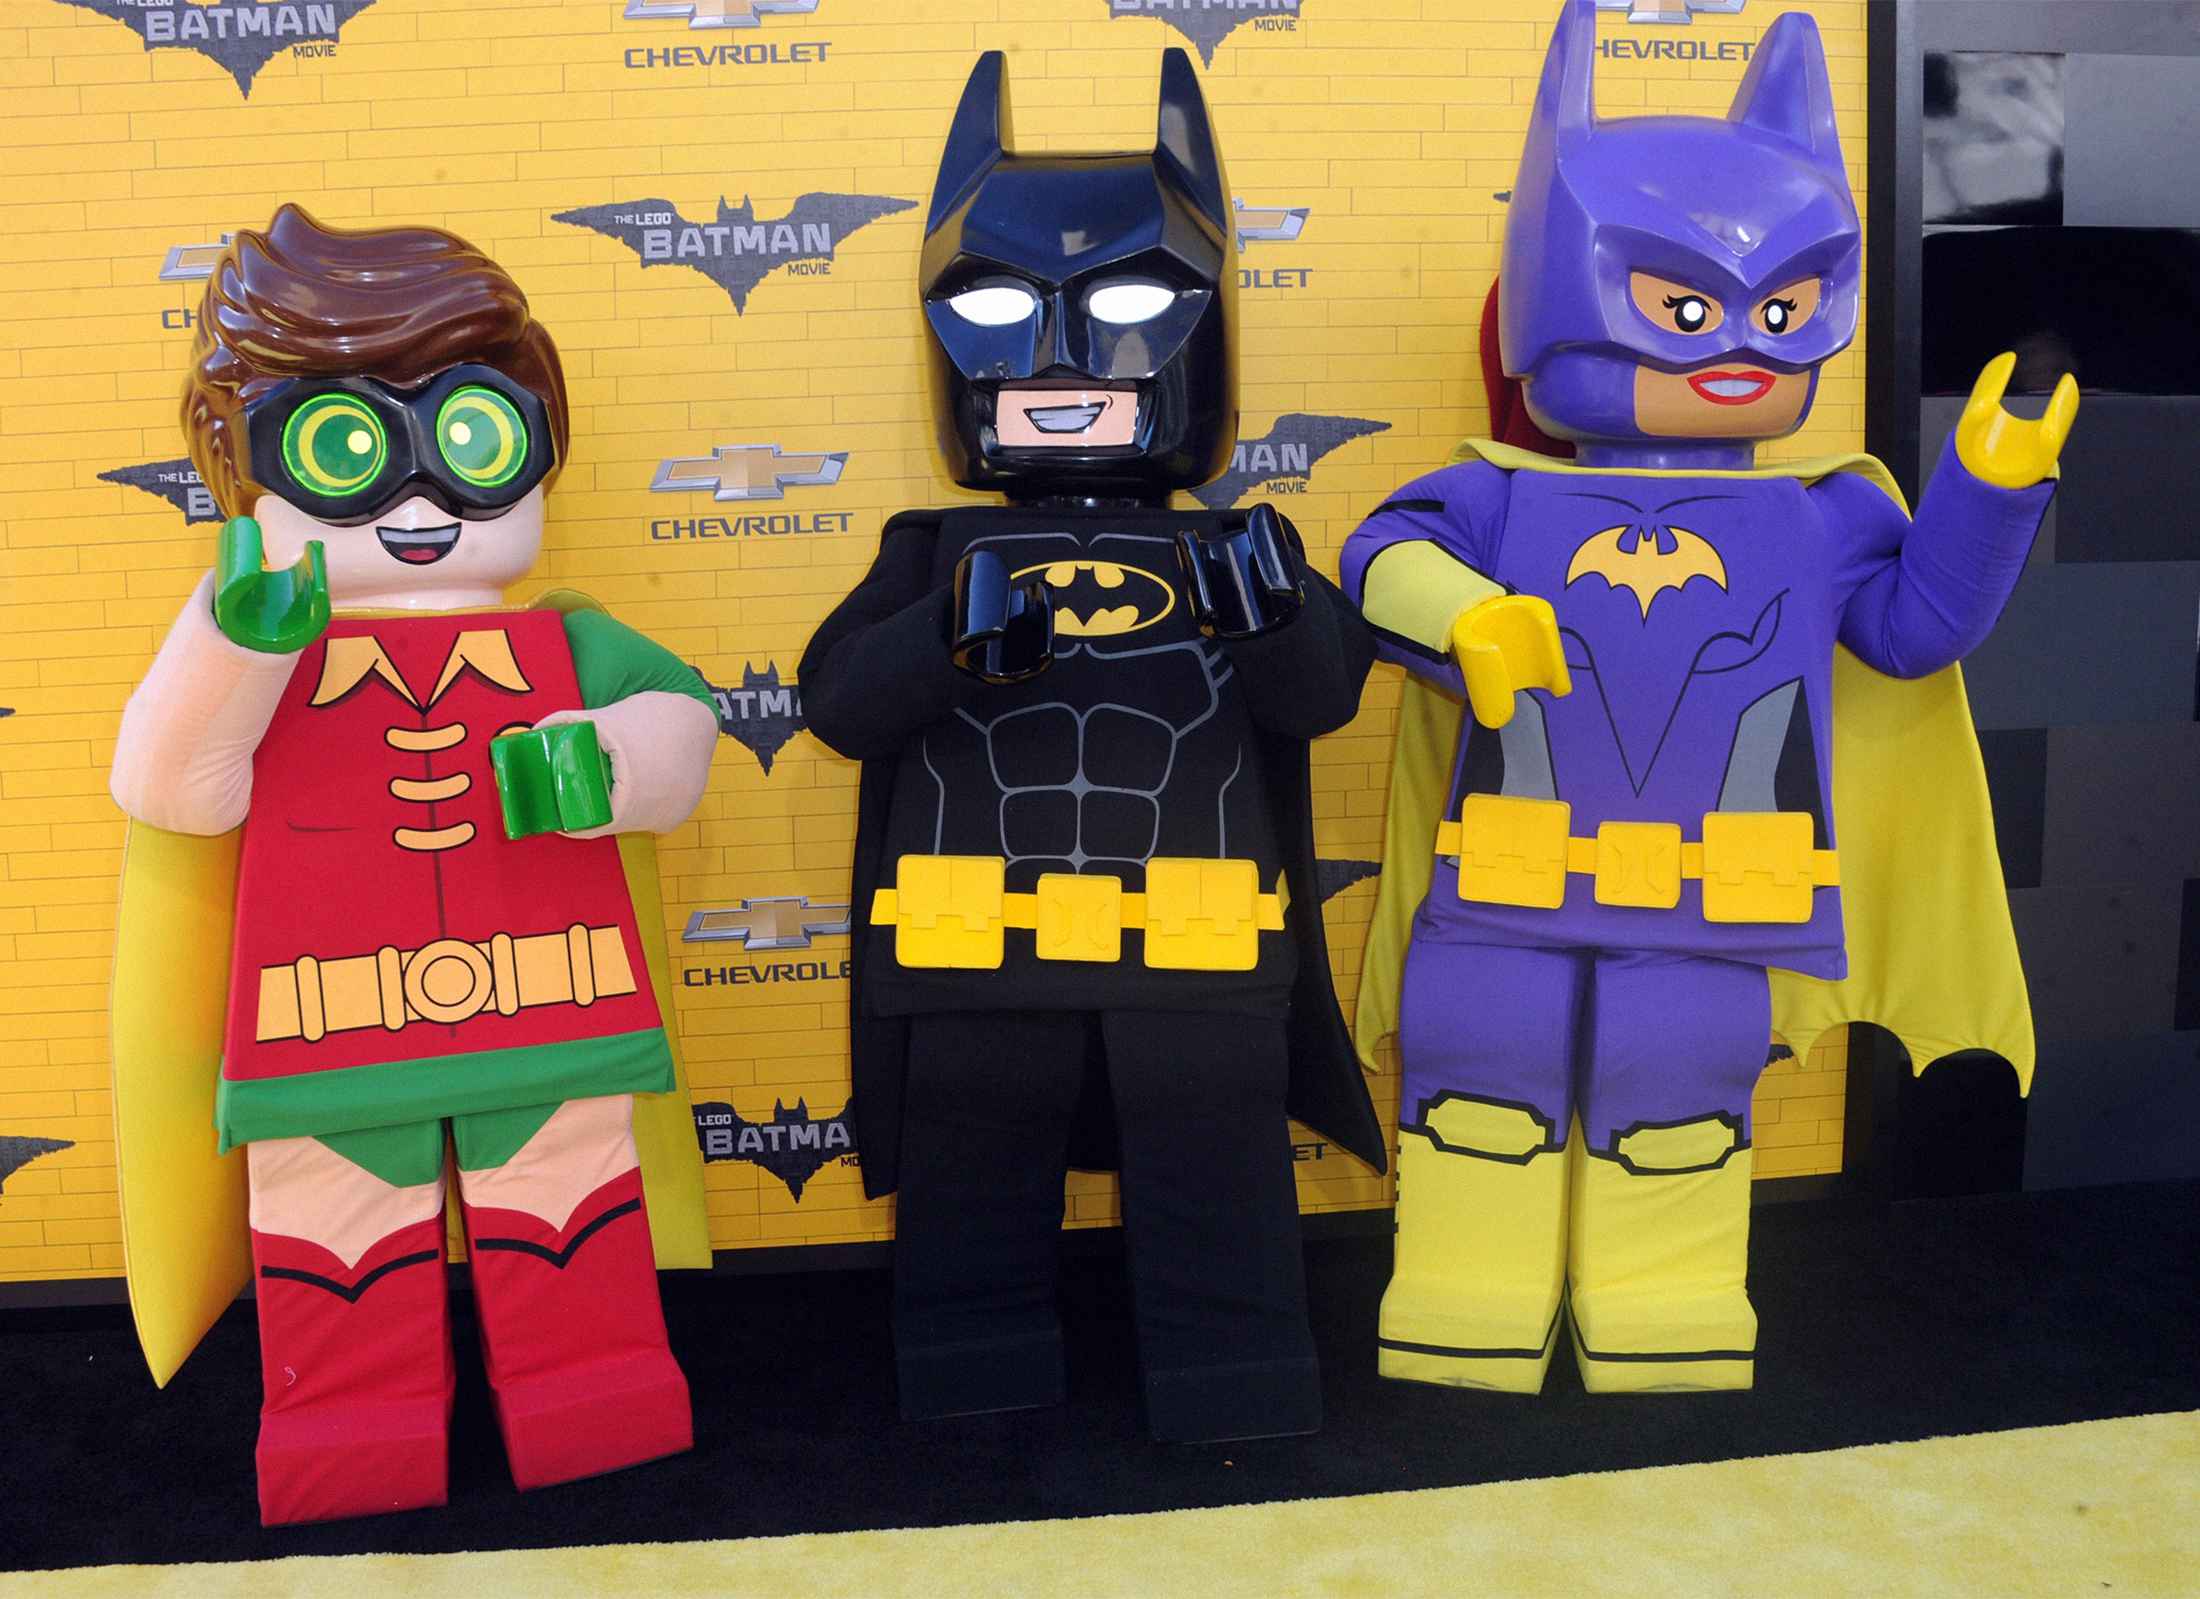 Lego Cuts 1,400 Jobs on Weak Sales of Batman Toys - Bloomberg